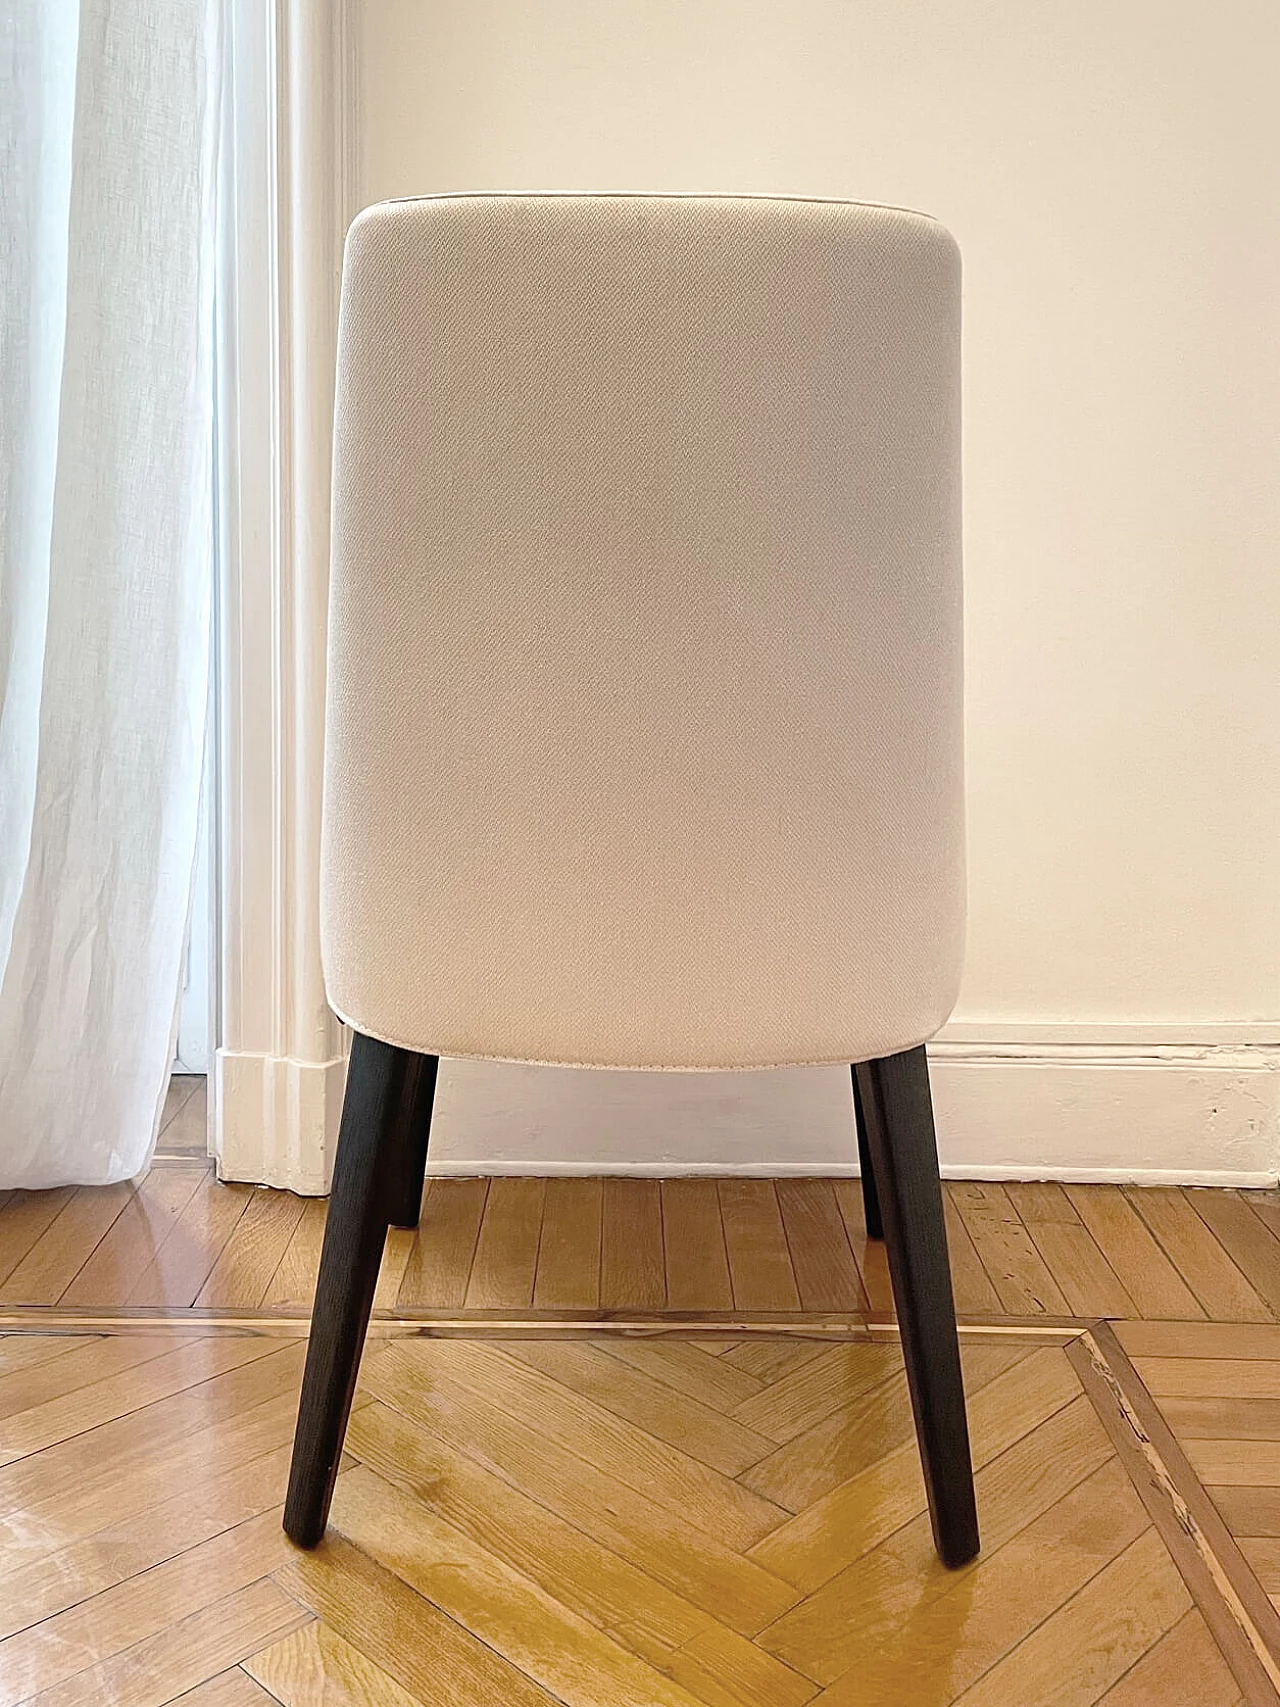 4 Febo Apta chairs by Antonio Citterio for Maxalto, B&B Italia, 2012 1367208